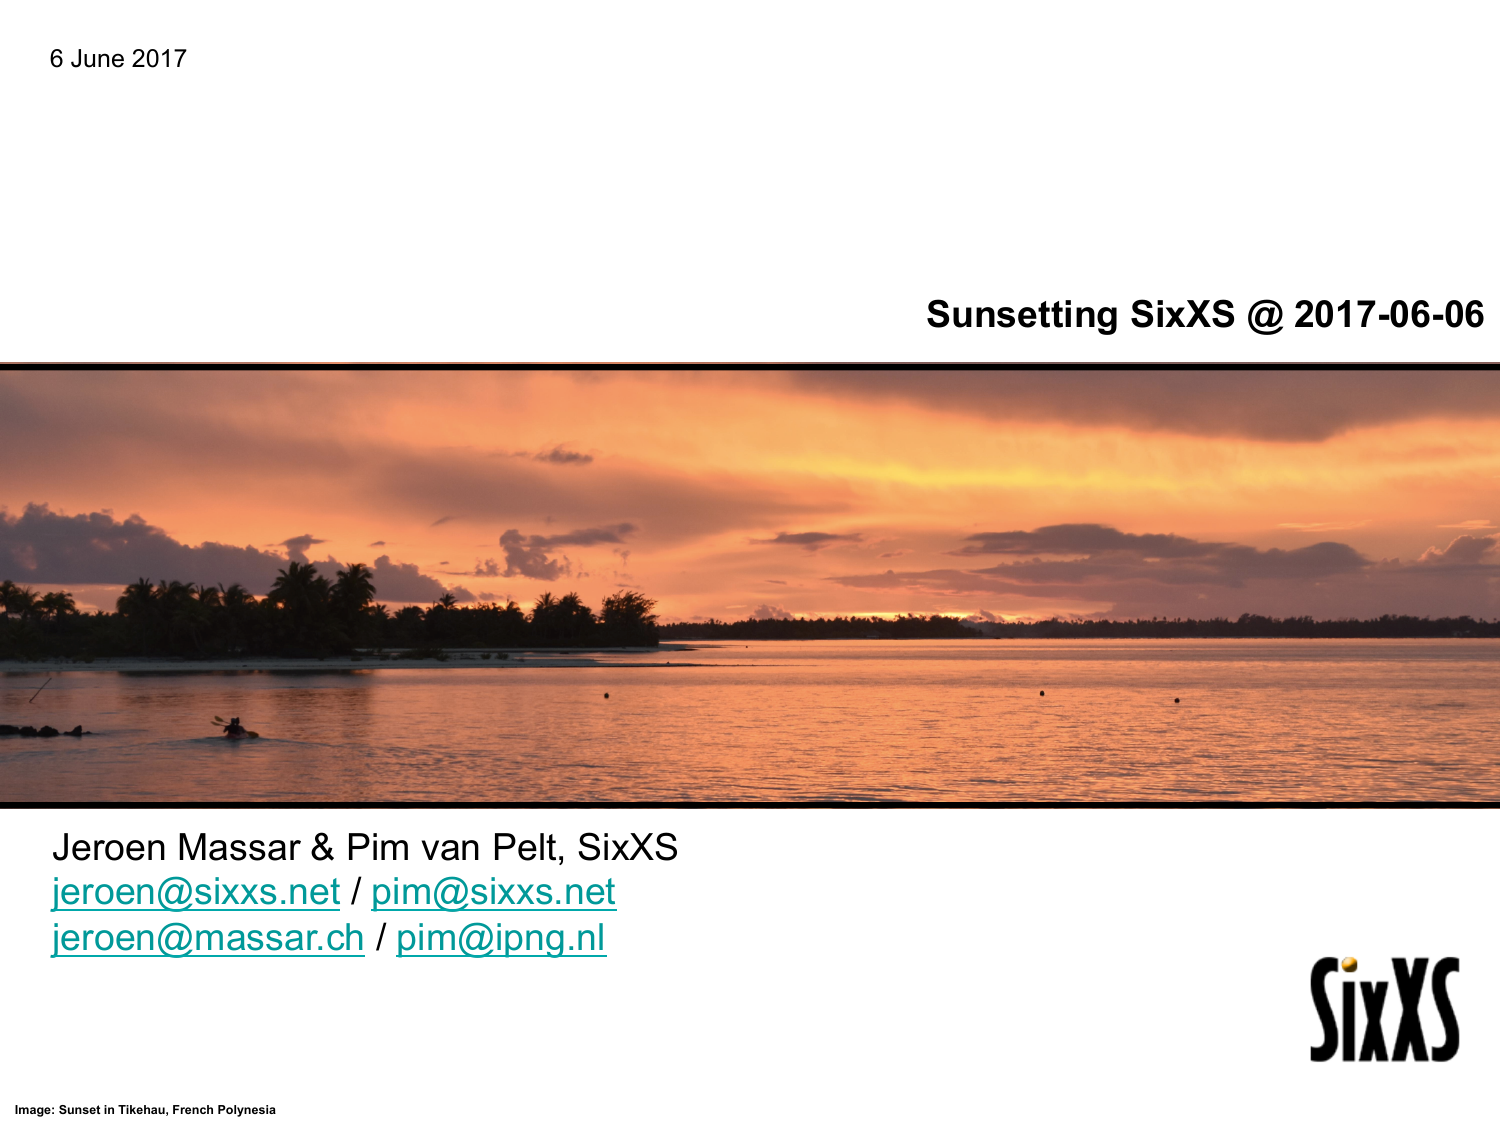 Sunsetting SixXS First Slide Image